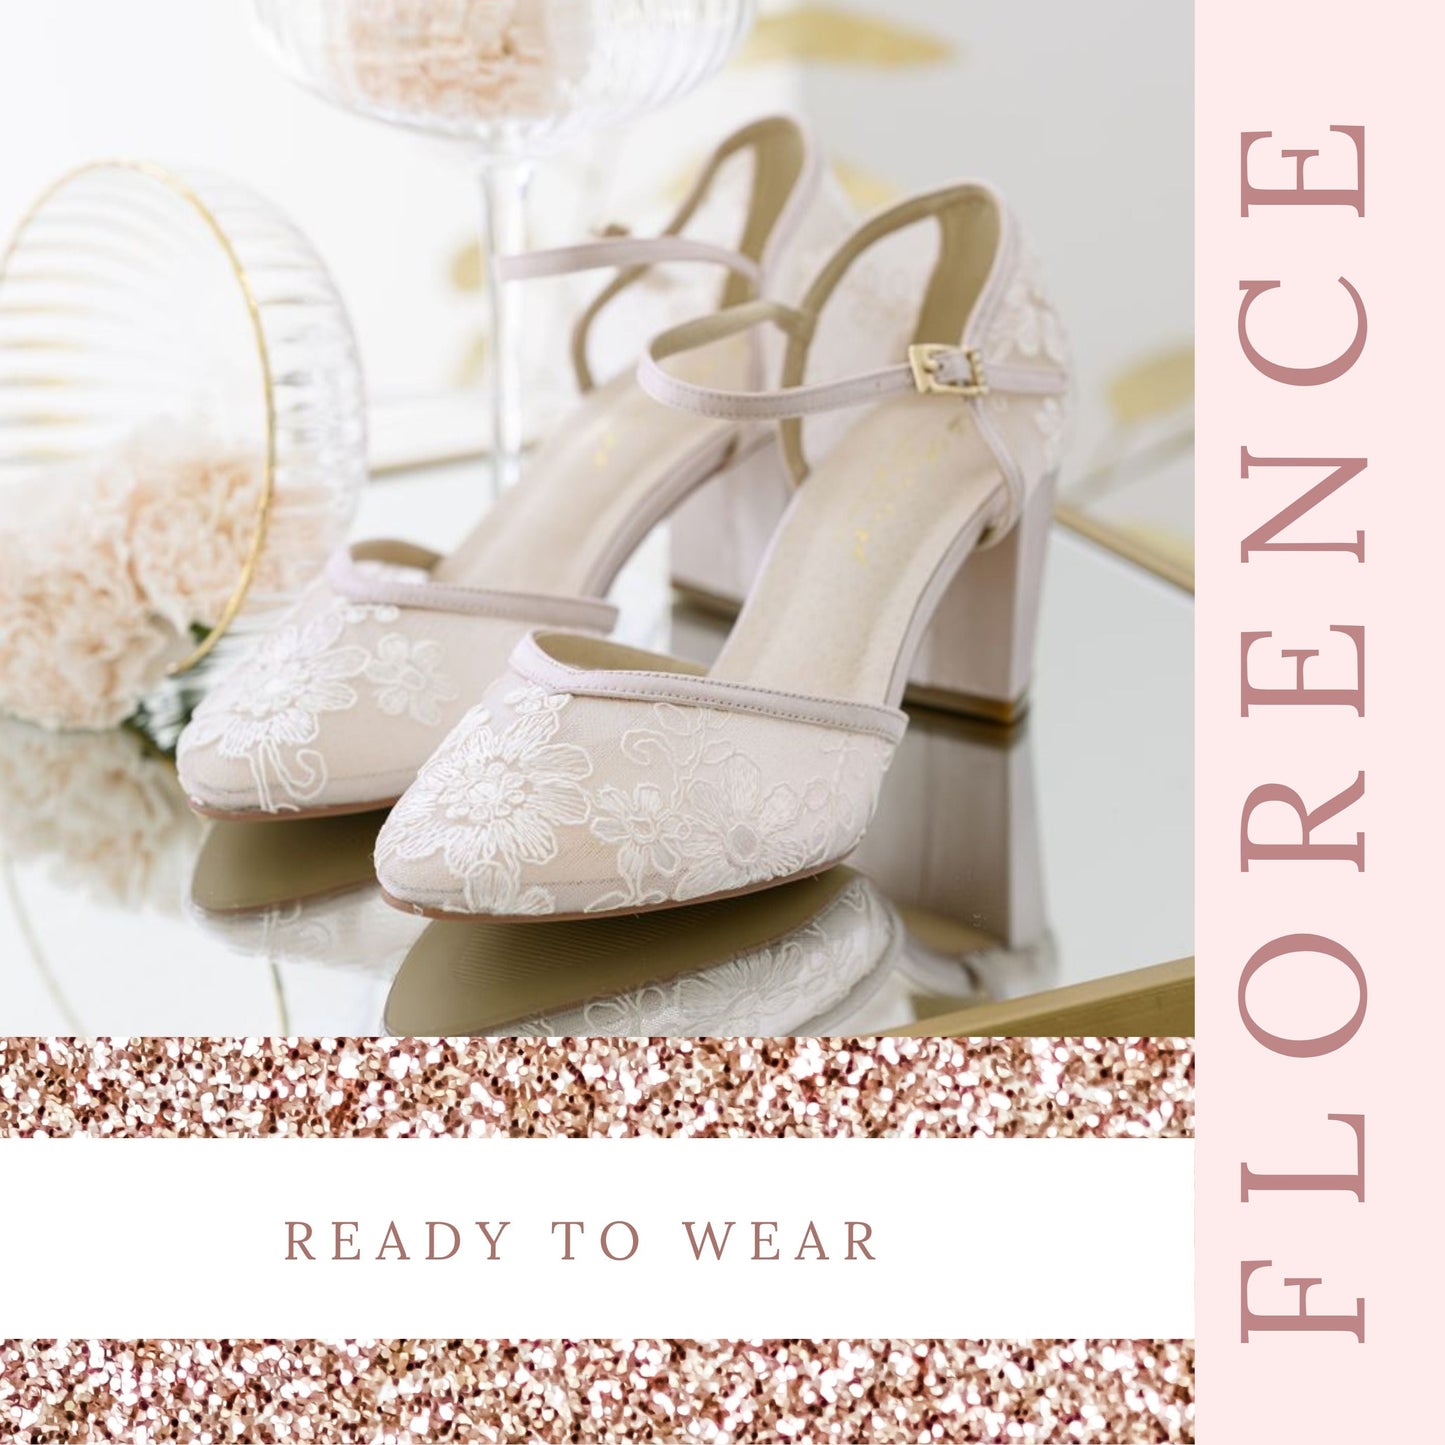 florence-blush-wedding-shoes